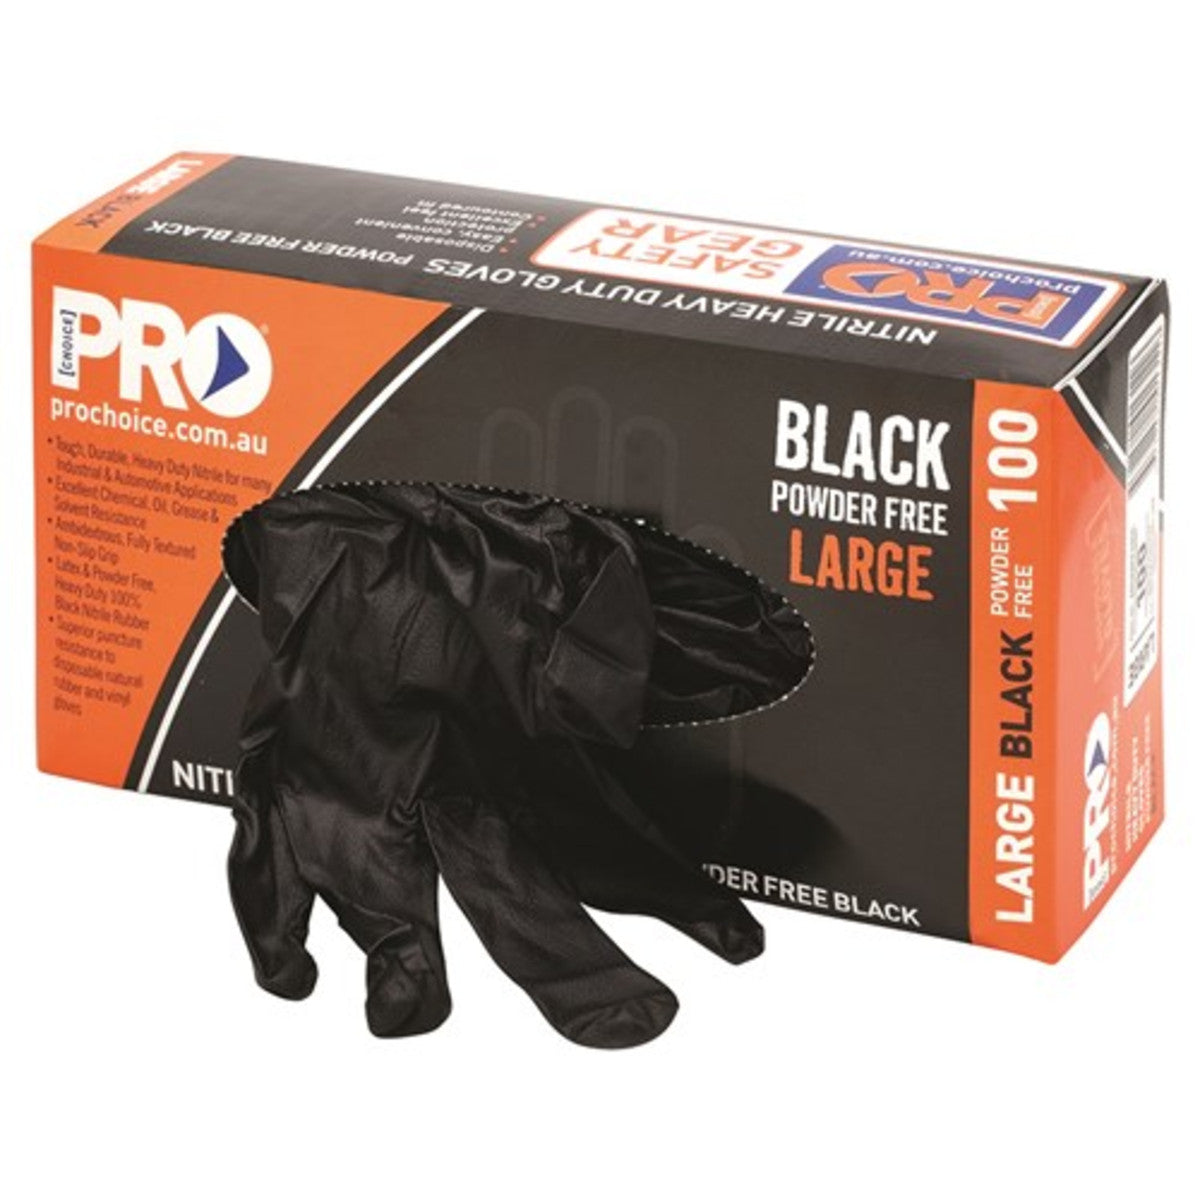 Pro Blue Nitrile Disposable Gloves Box/ 100 Size Large